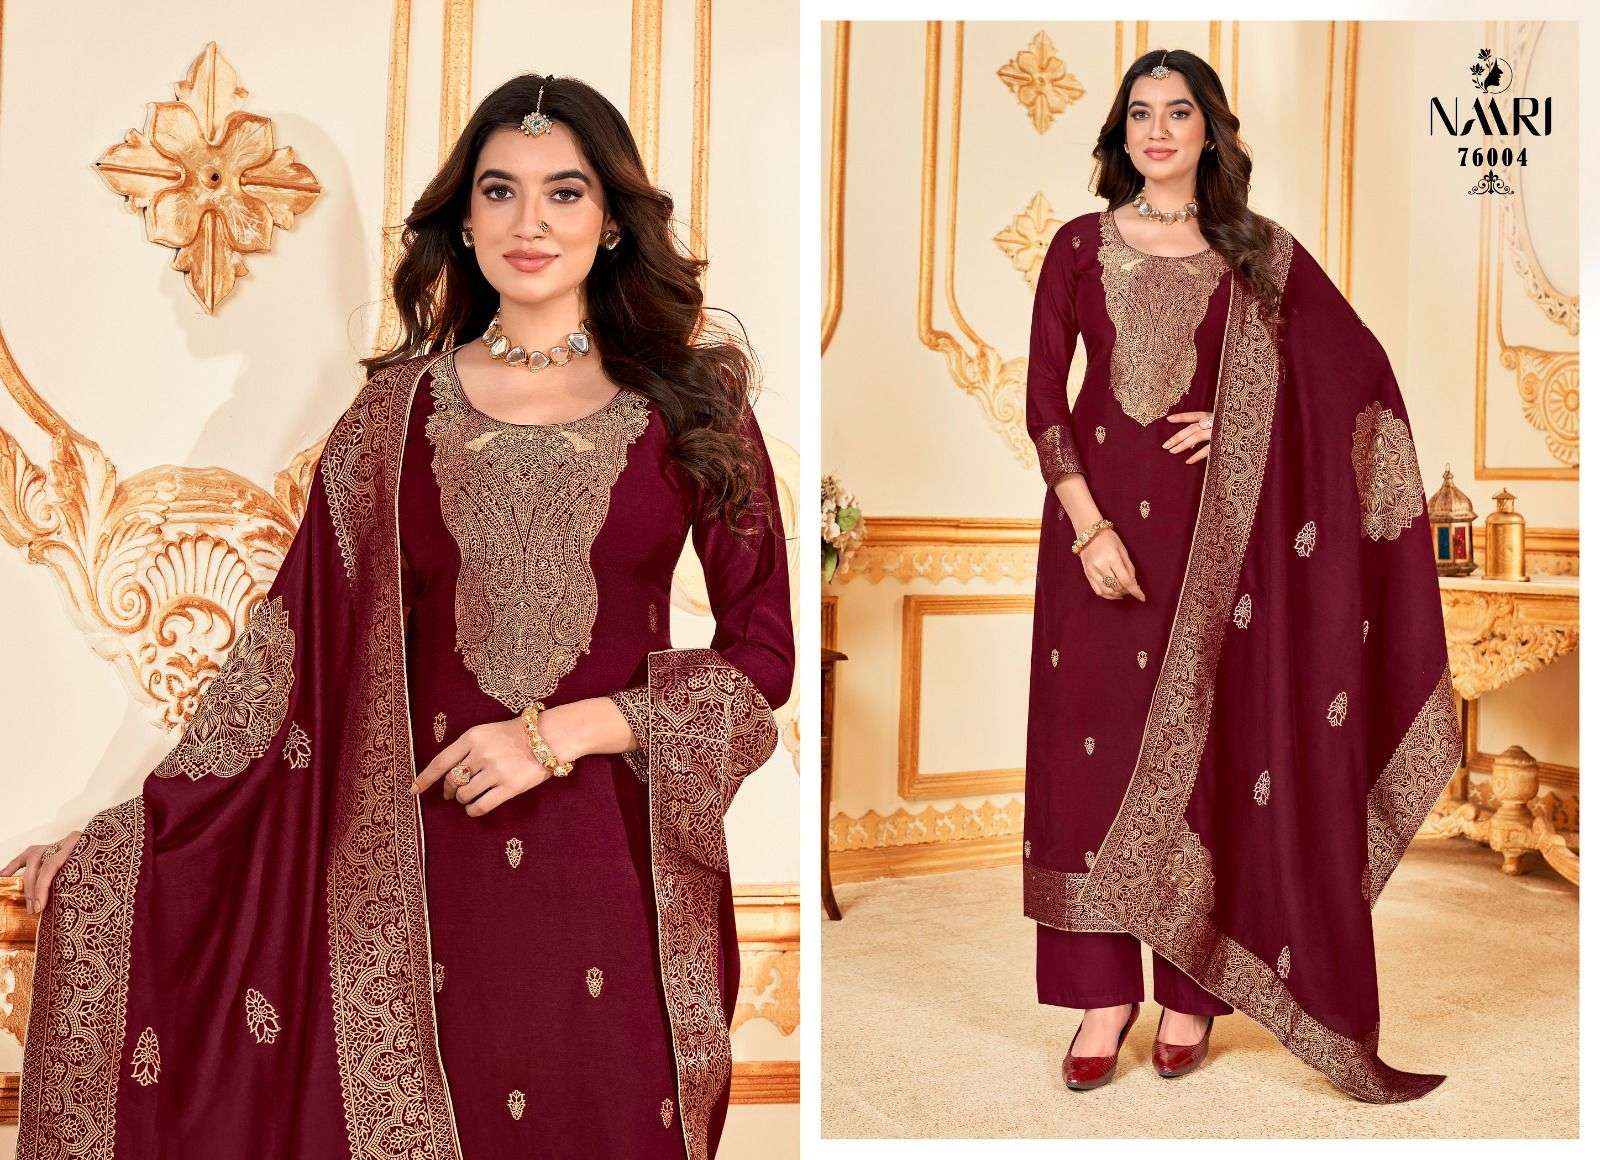 Nayna Buy Naari Online Wholesaler Latest Collection Unstitched Salwar Suit Set